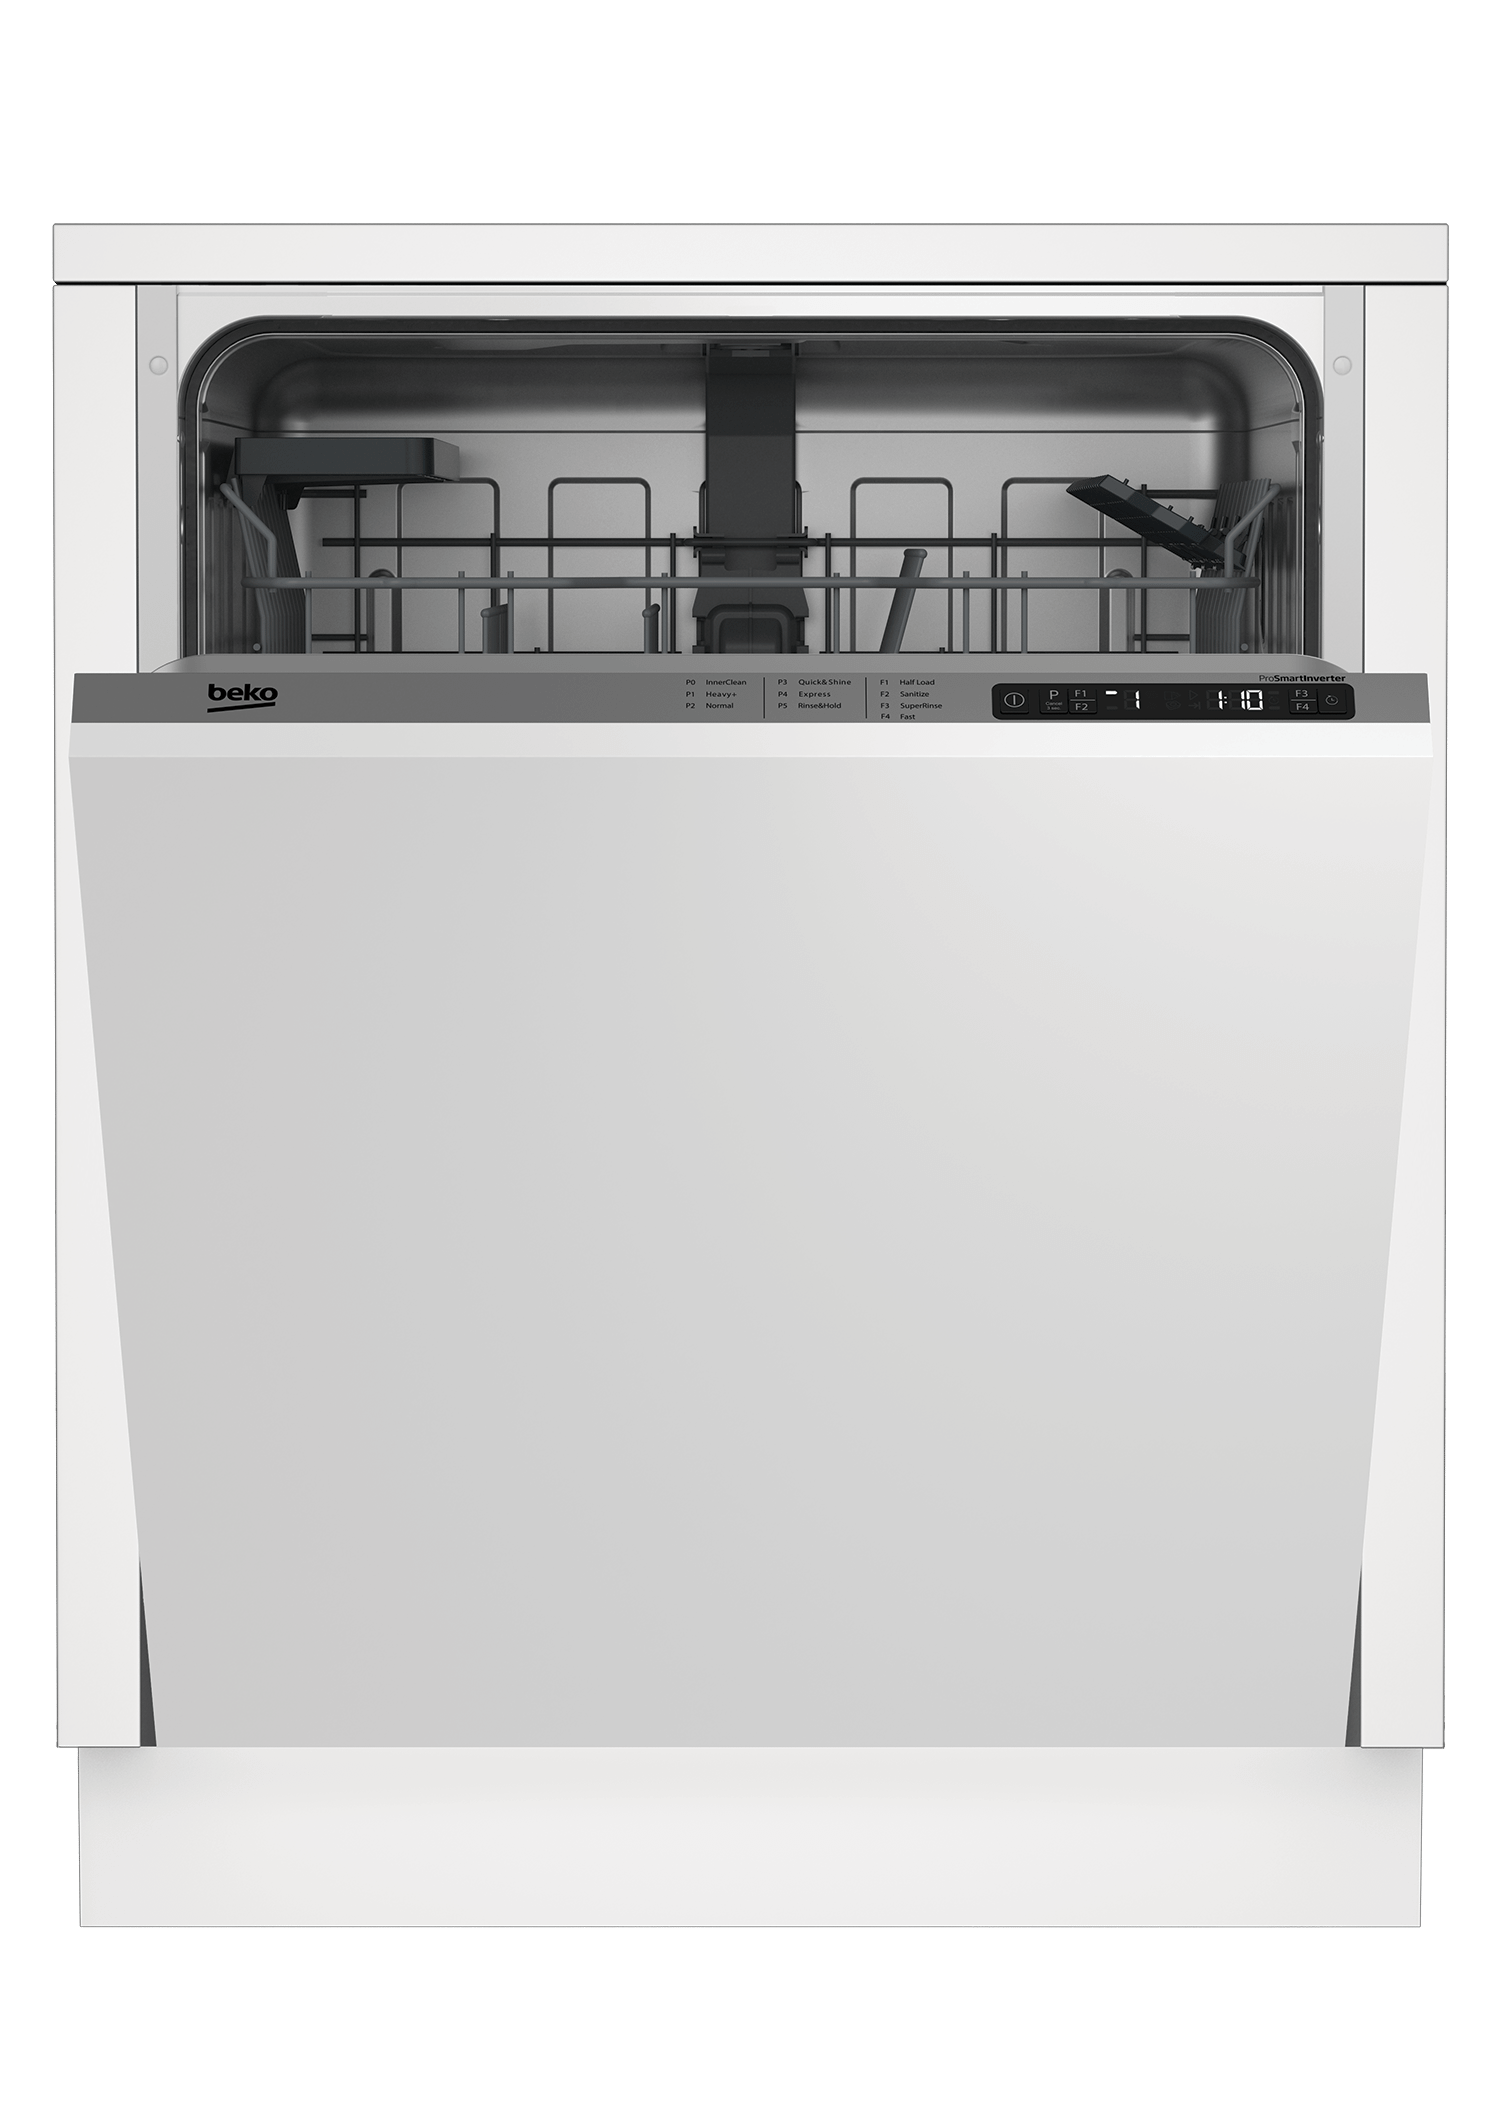 Beko Full Size Dishwasher, 14 place settings, 48 dBa, Fully Integrated Panel Ready